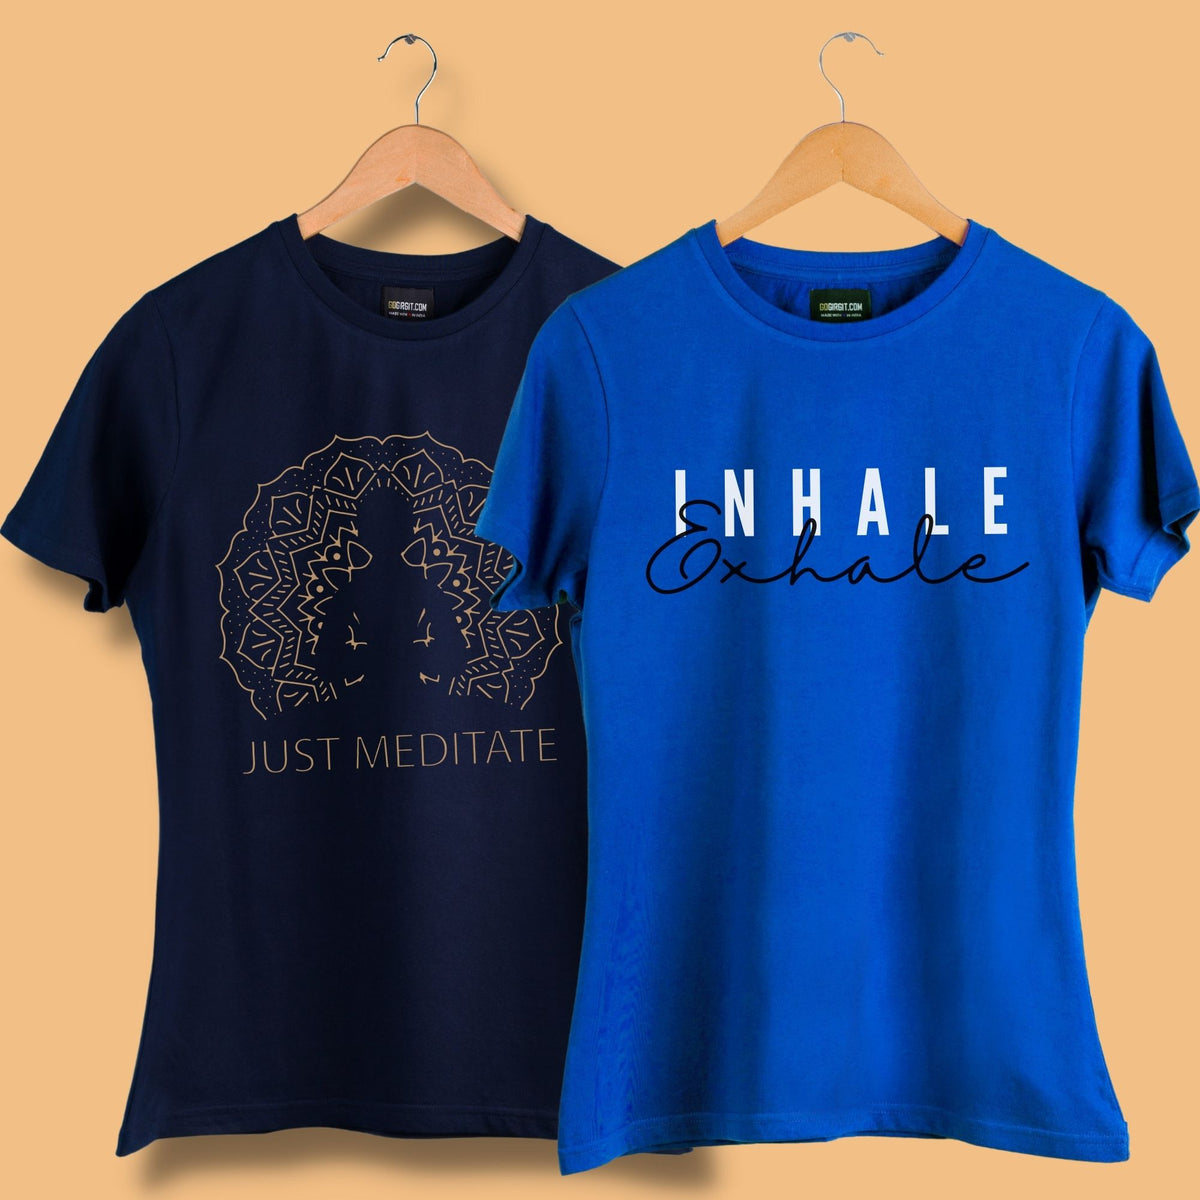 yoga vibes only shirt design  women yoga t shirt design - Buy t-shirt  designs